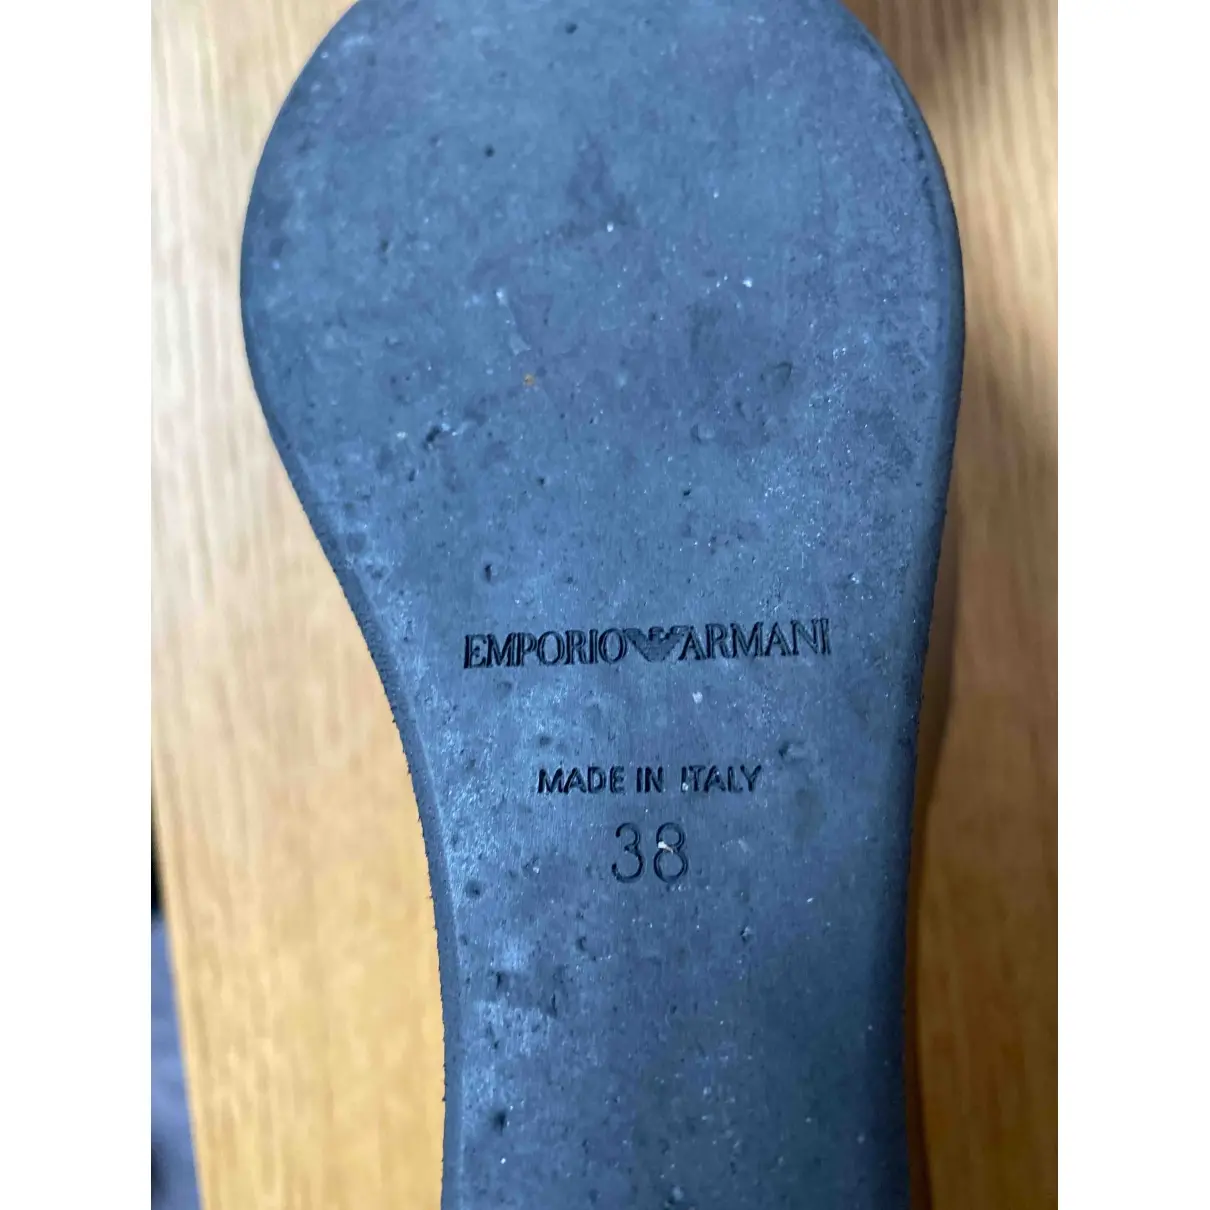 Buy Emporio Armani Leather heels online